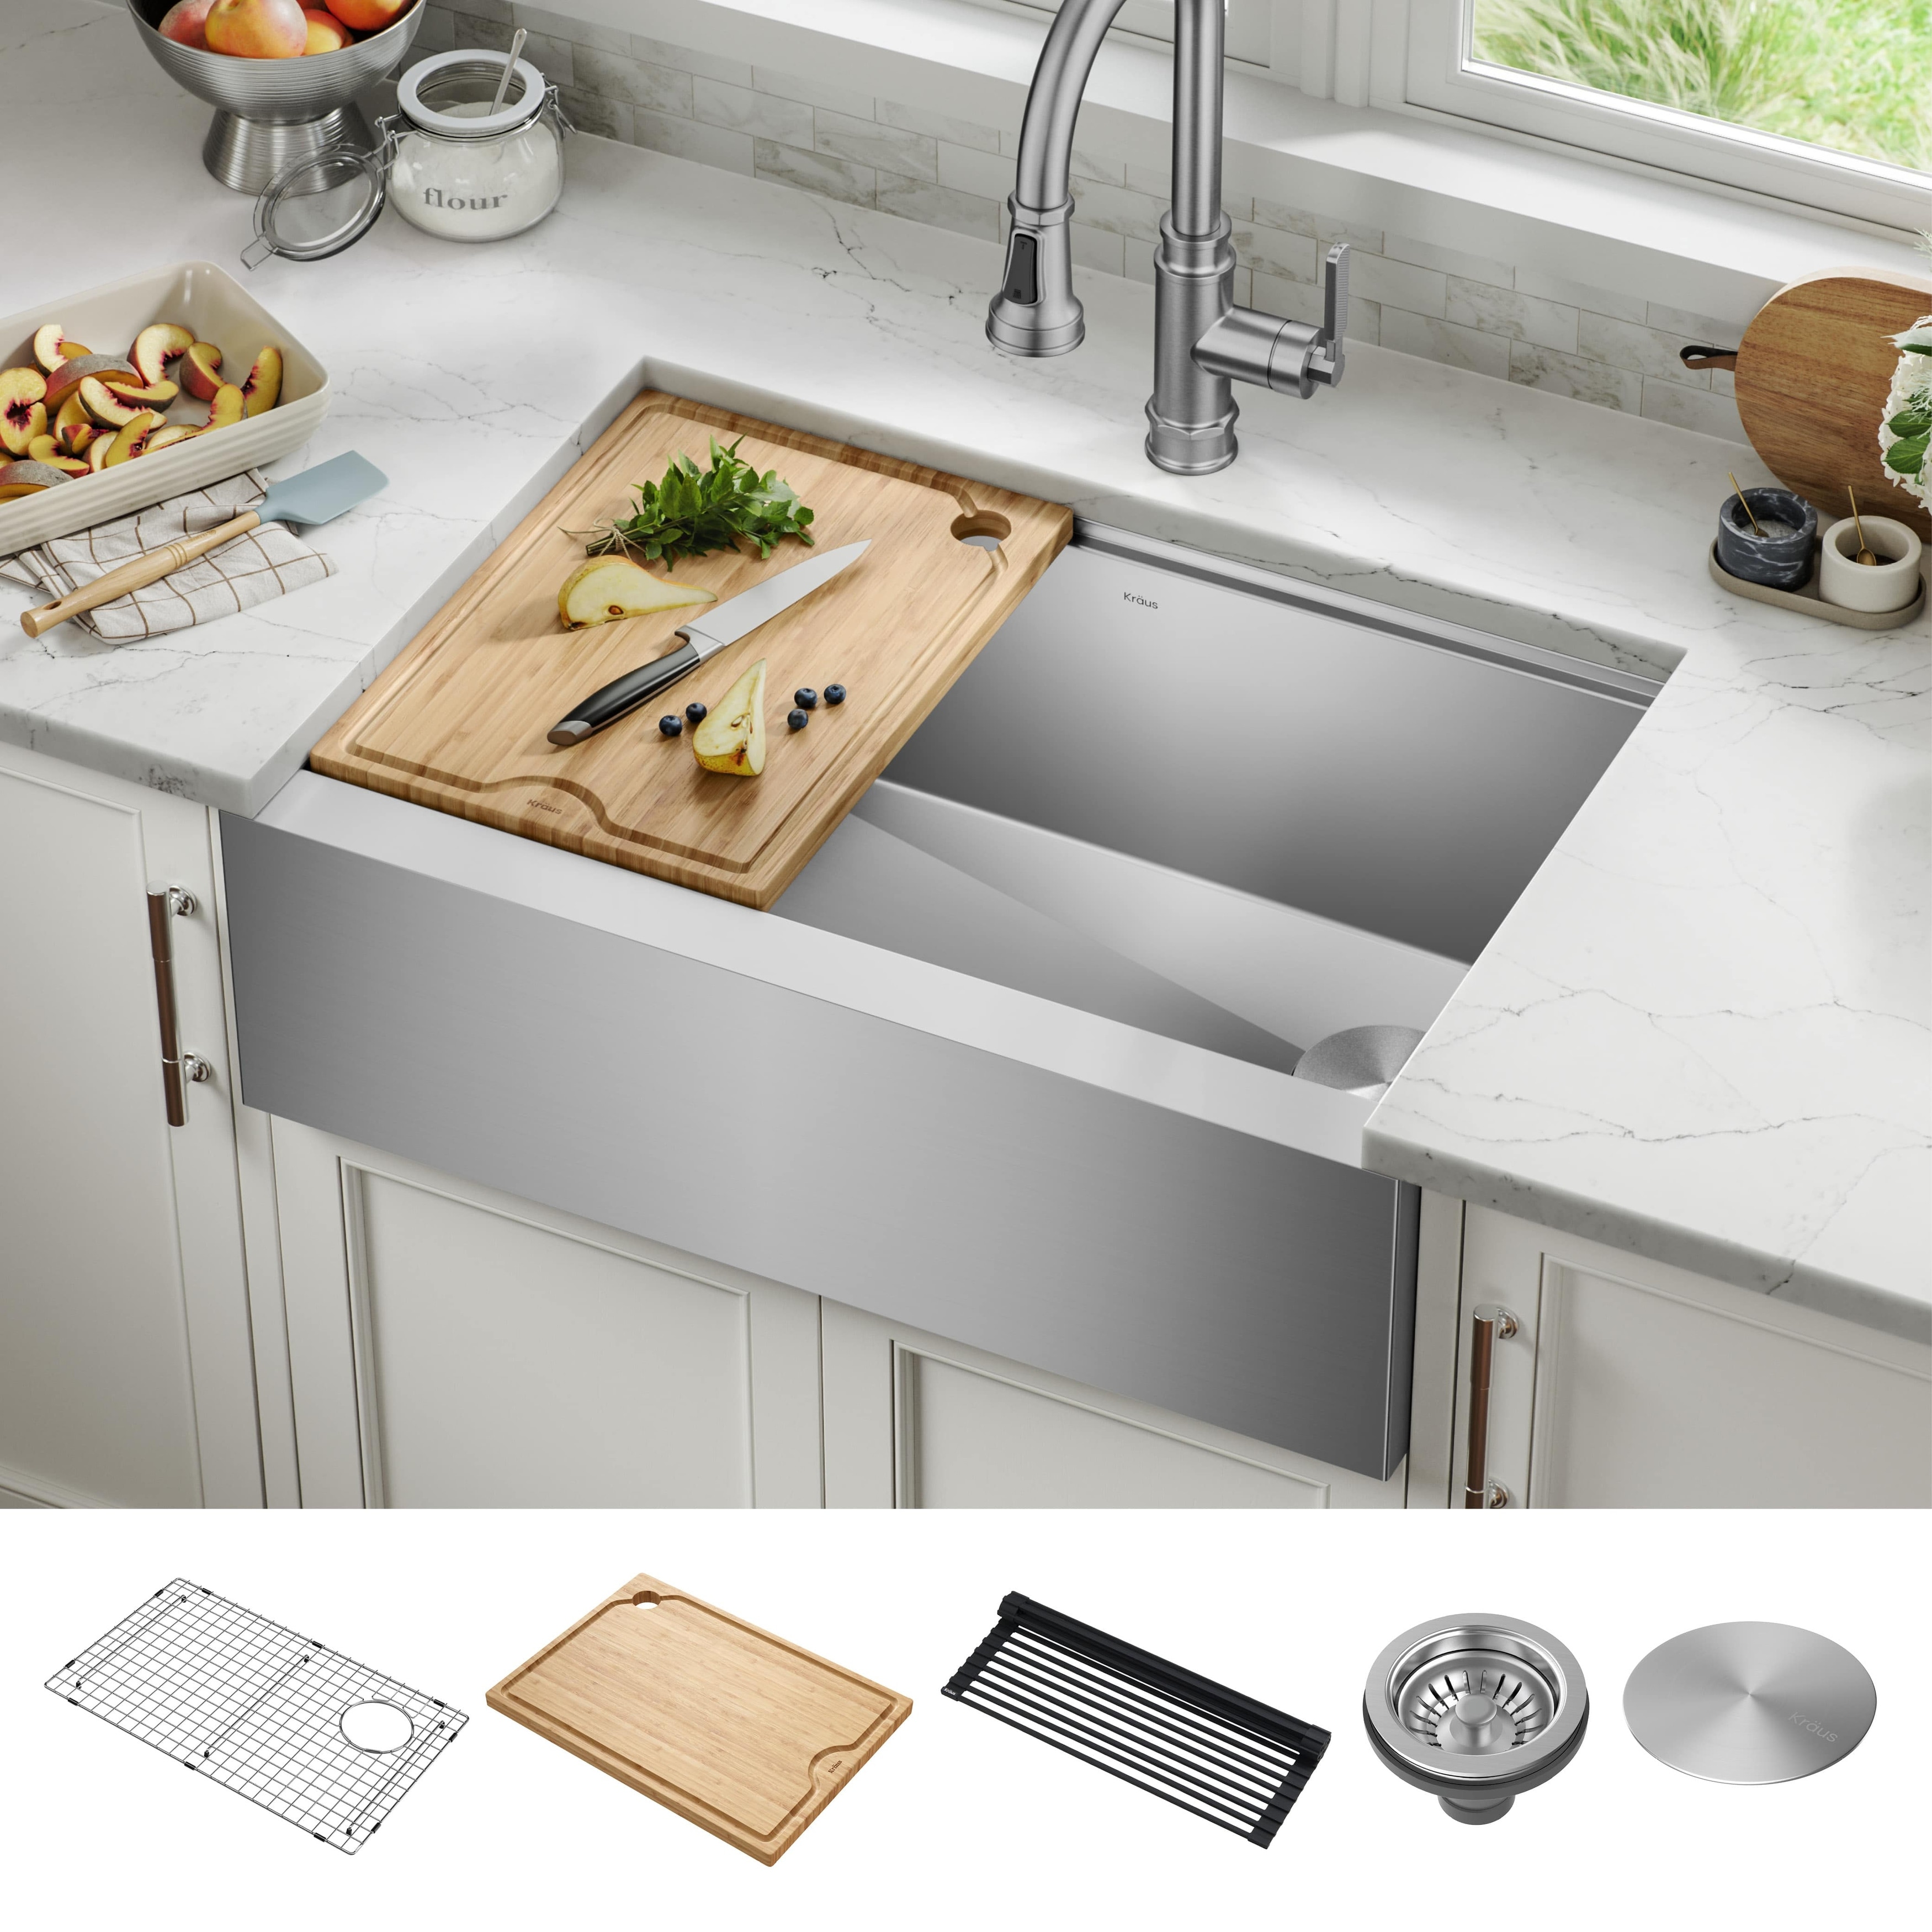  Kraus KDR-3 Kore Kitchen Sink Dish Drying Rack Drainer and  Utensil Holder, 17 inch, Silver : Home & Kitchen